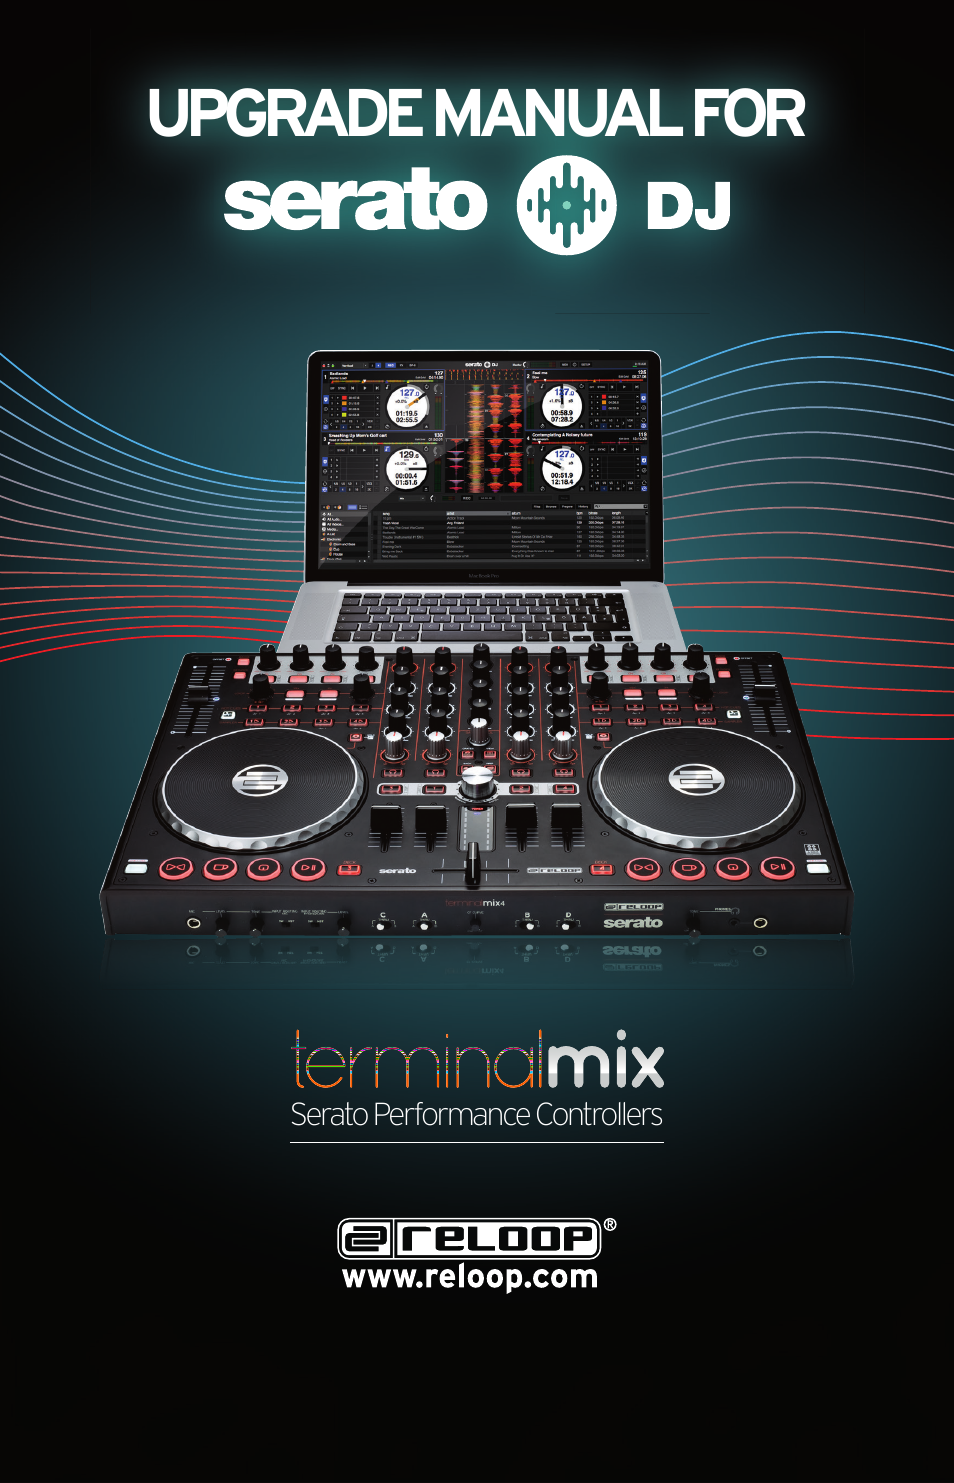 TERMINAL MIX 2 SERATO DJ BUNDLE - Upgrade Manual For Serato DJ